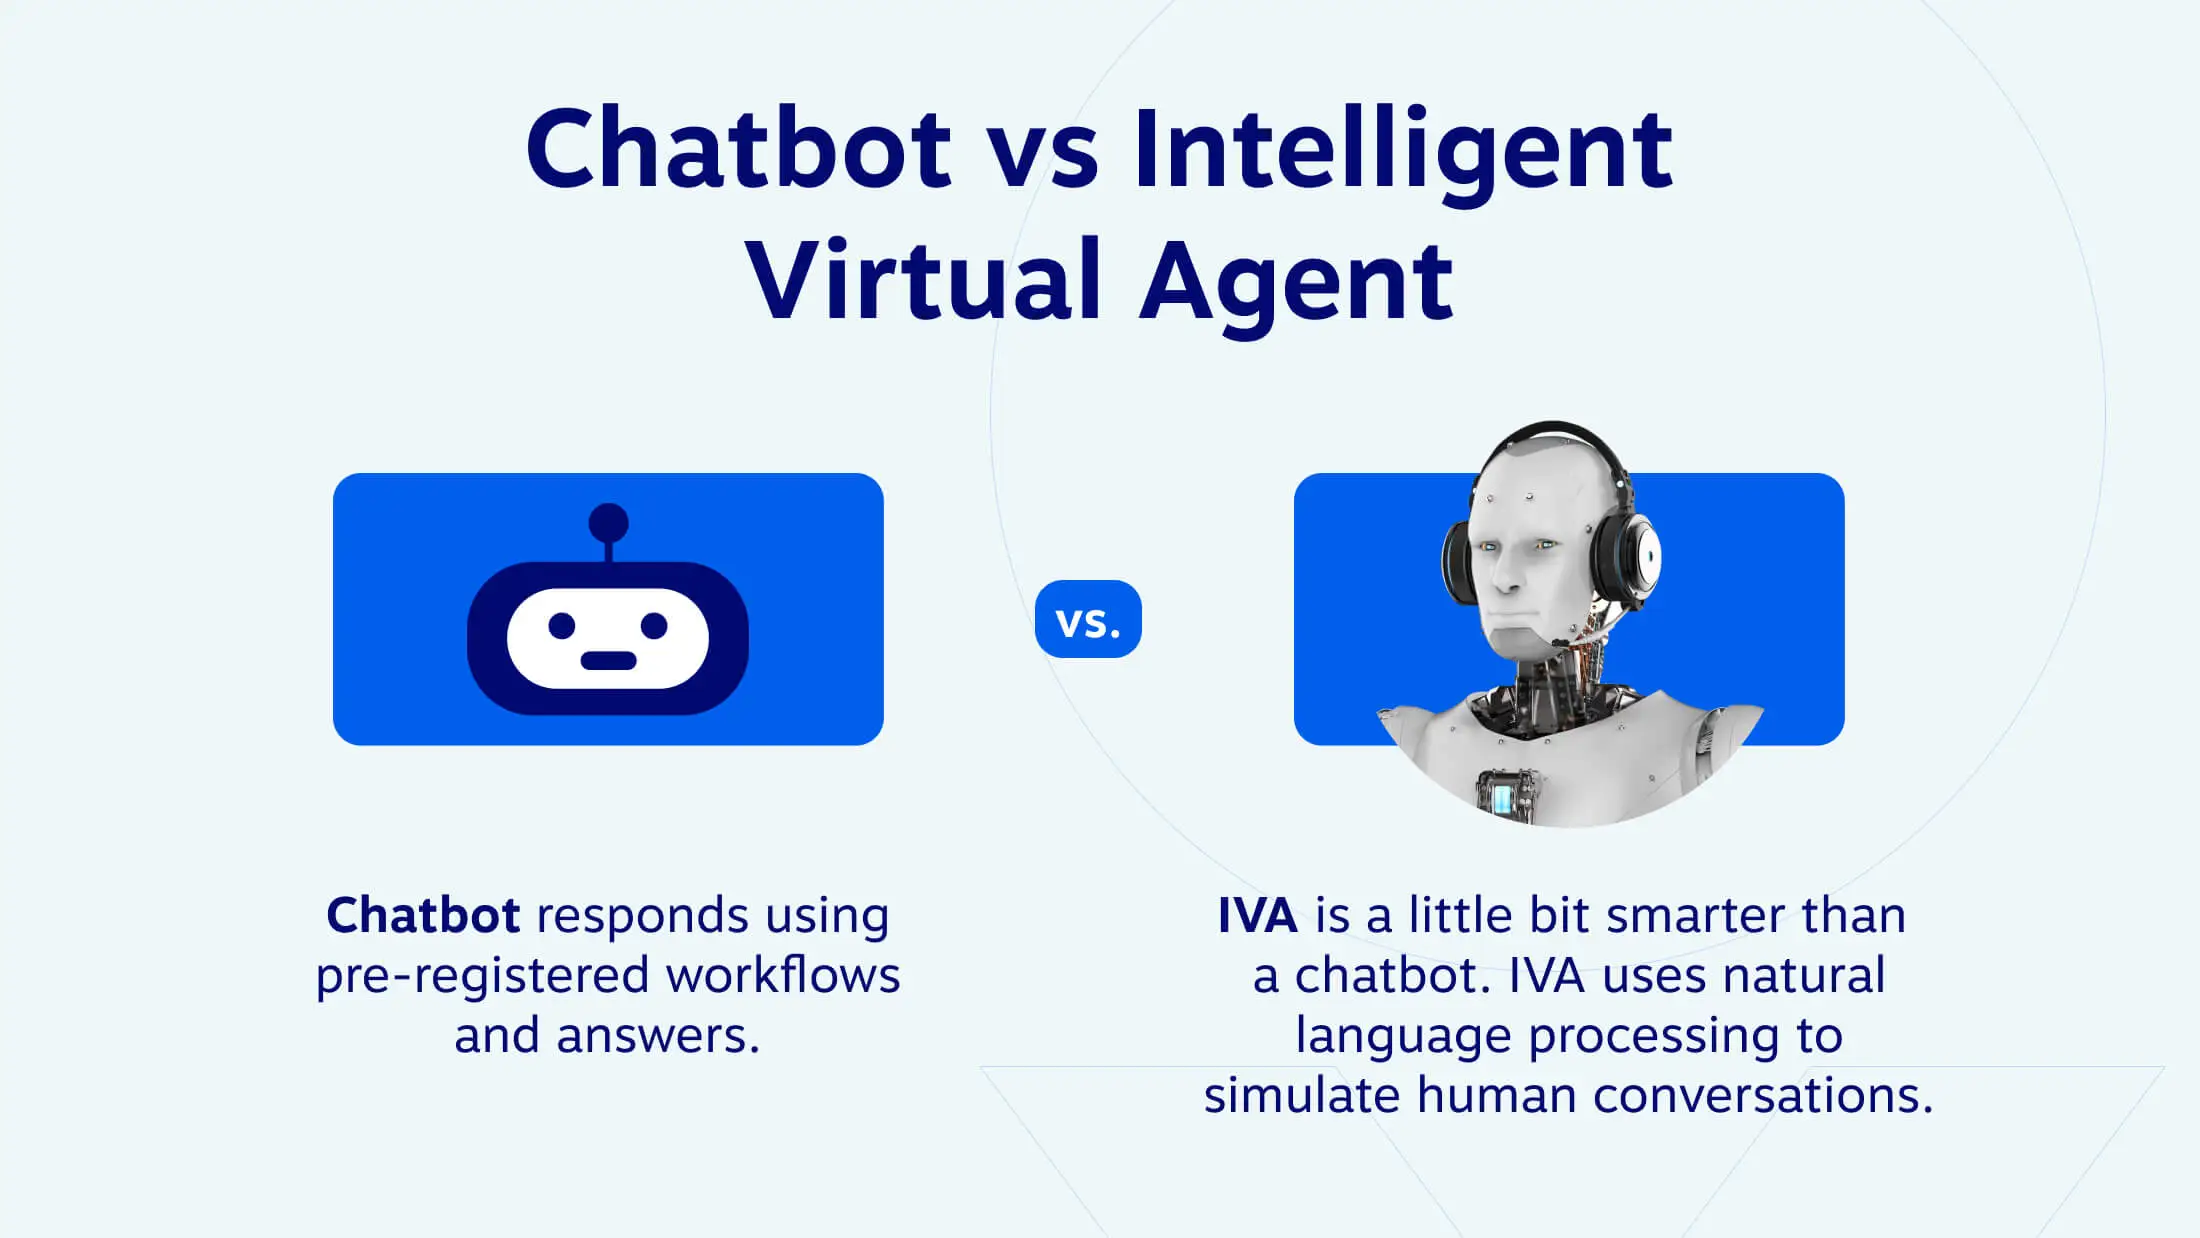 Chatbot vs. IVA